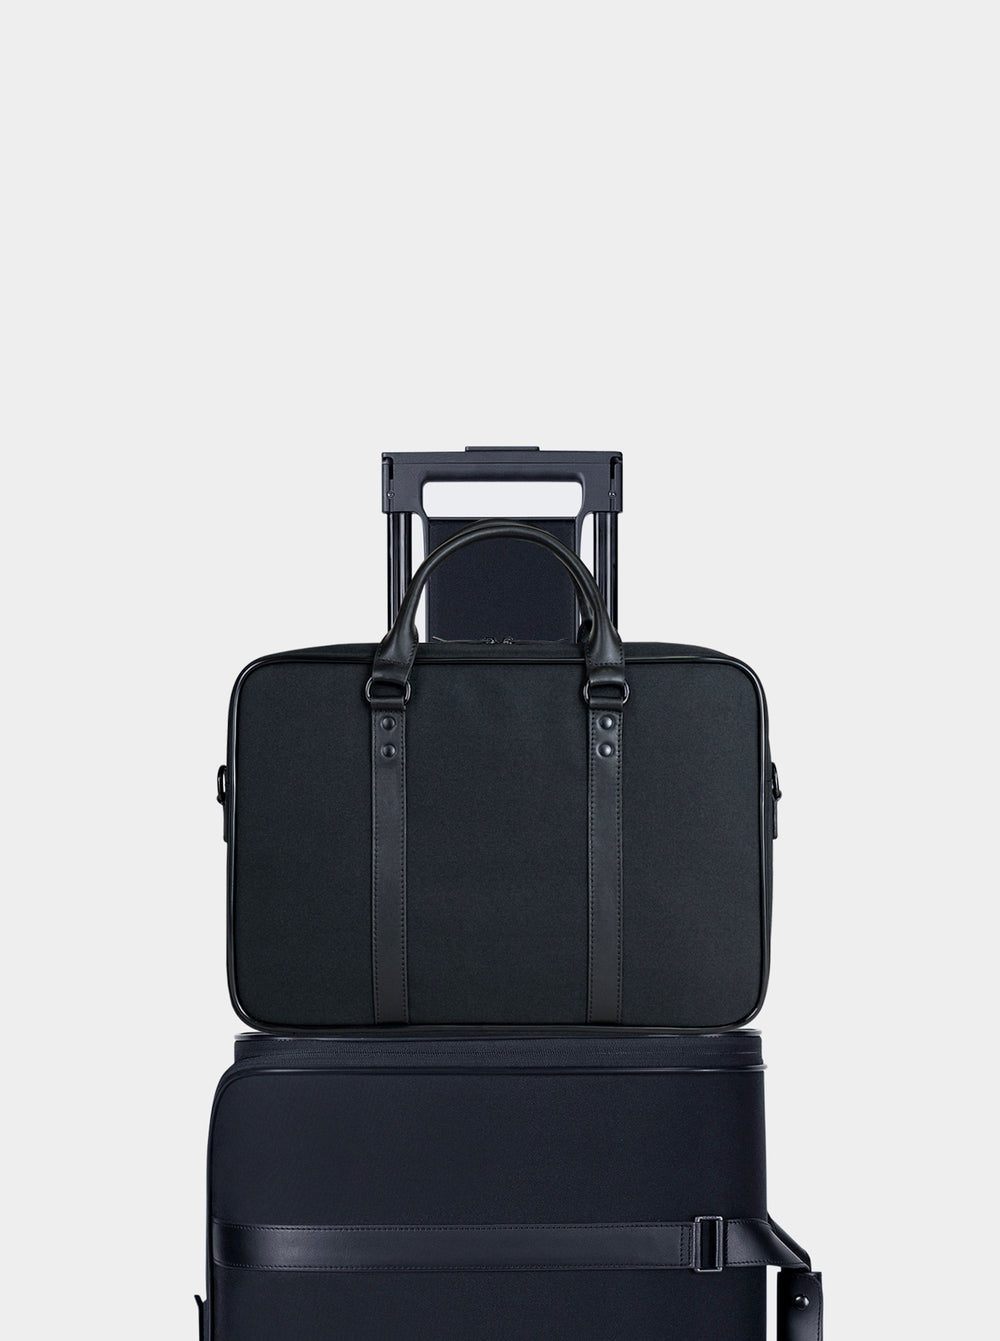 vocier c25 black business briefcase travel